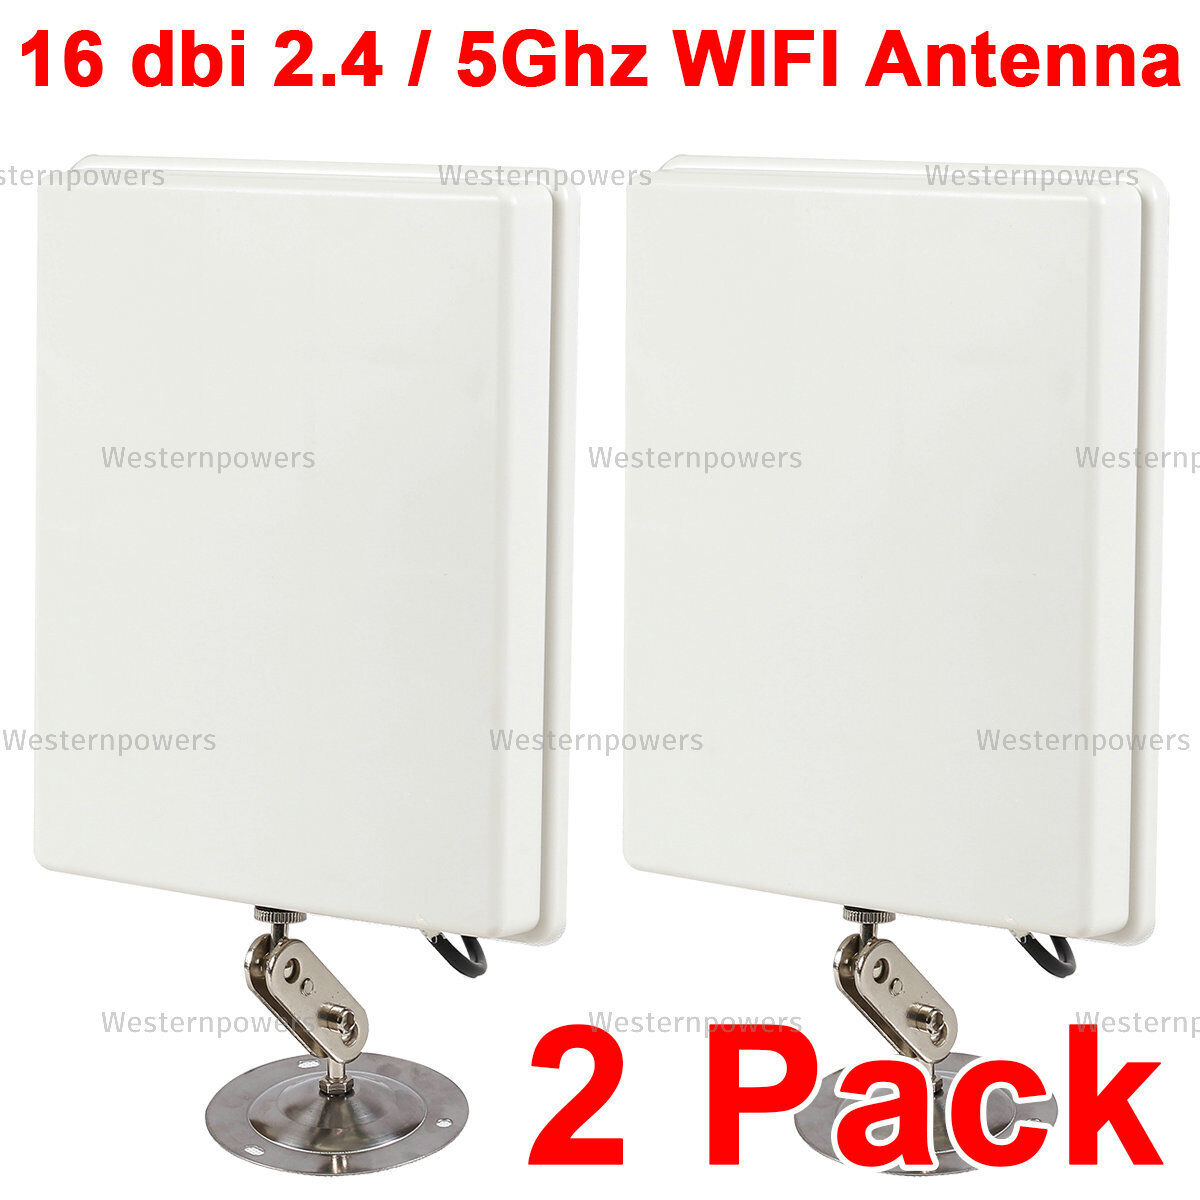 2 Pack Wireless WIFI WLAN 16dbi RP-SMA 2.4/5Ghz Router Directiona Gain Antenna